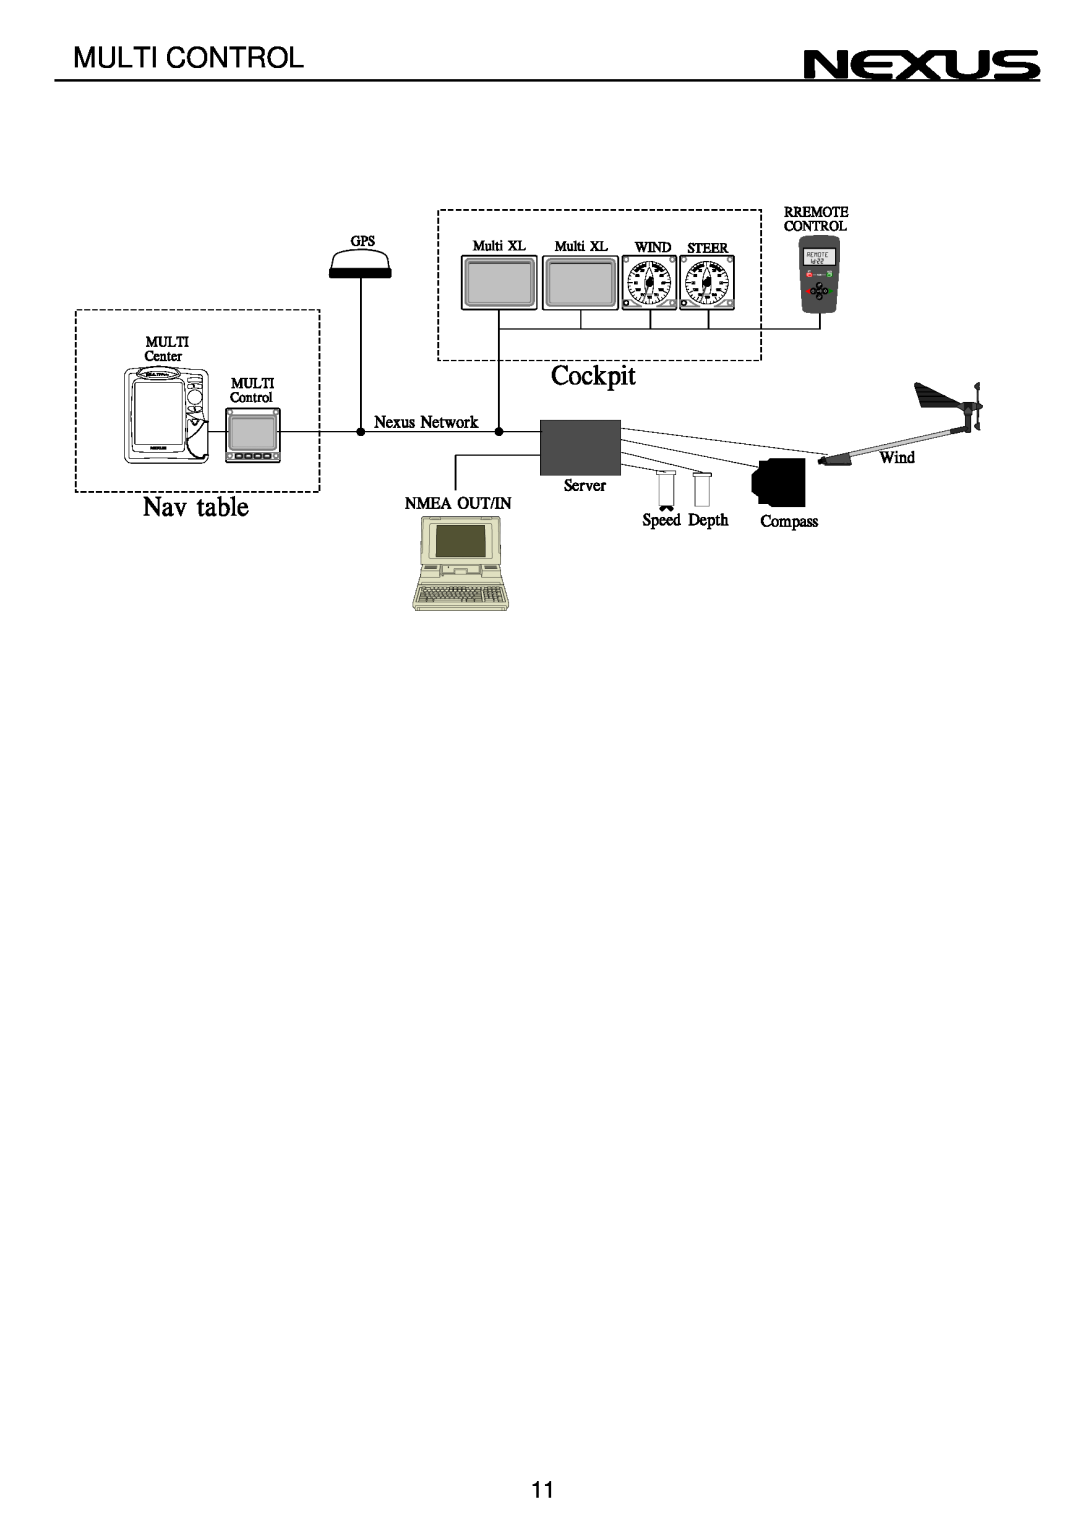 Nexus 21 Multi Control operation manual 